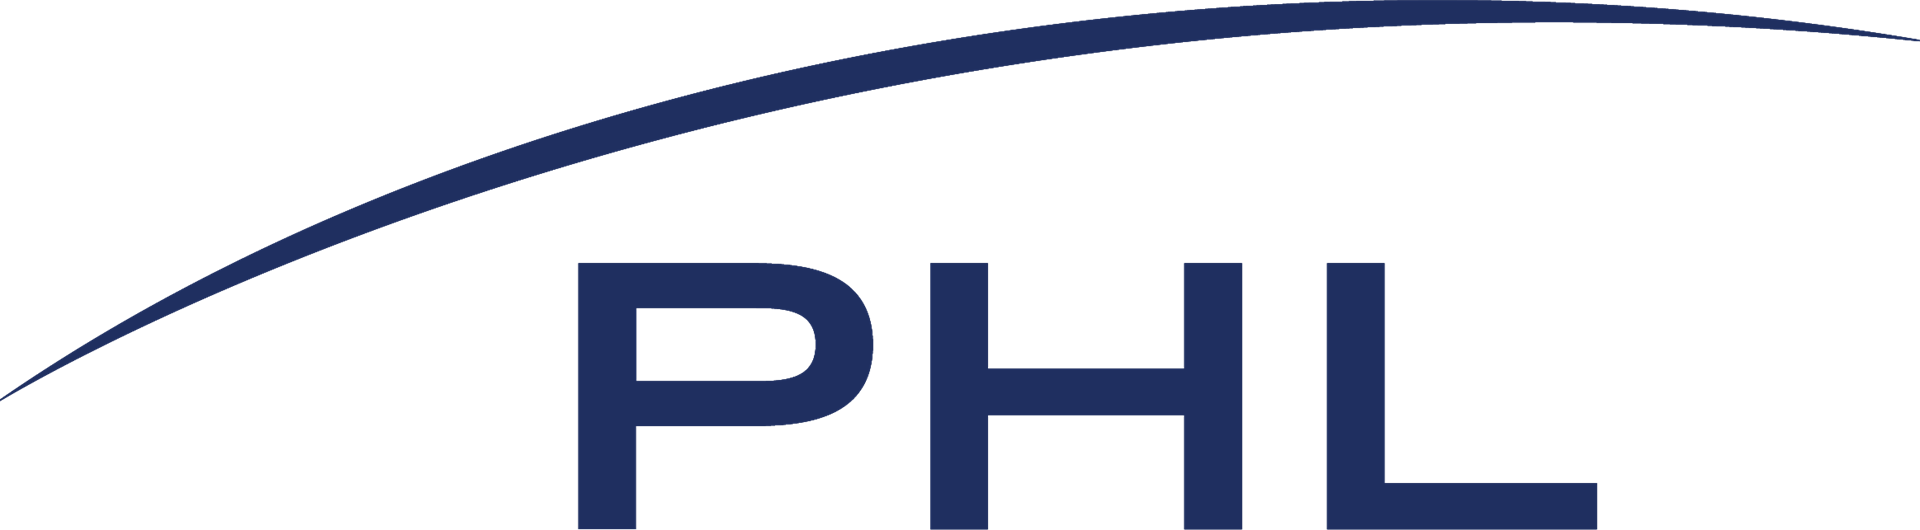 Philadelphia International Airport logo